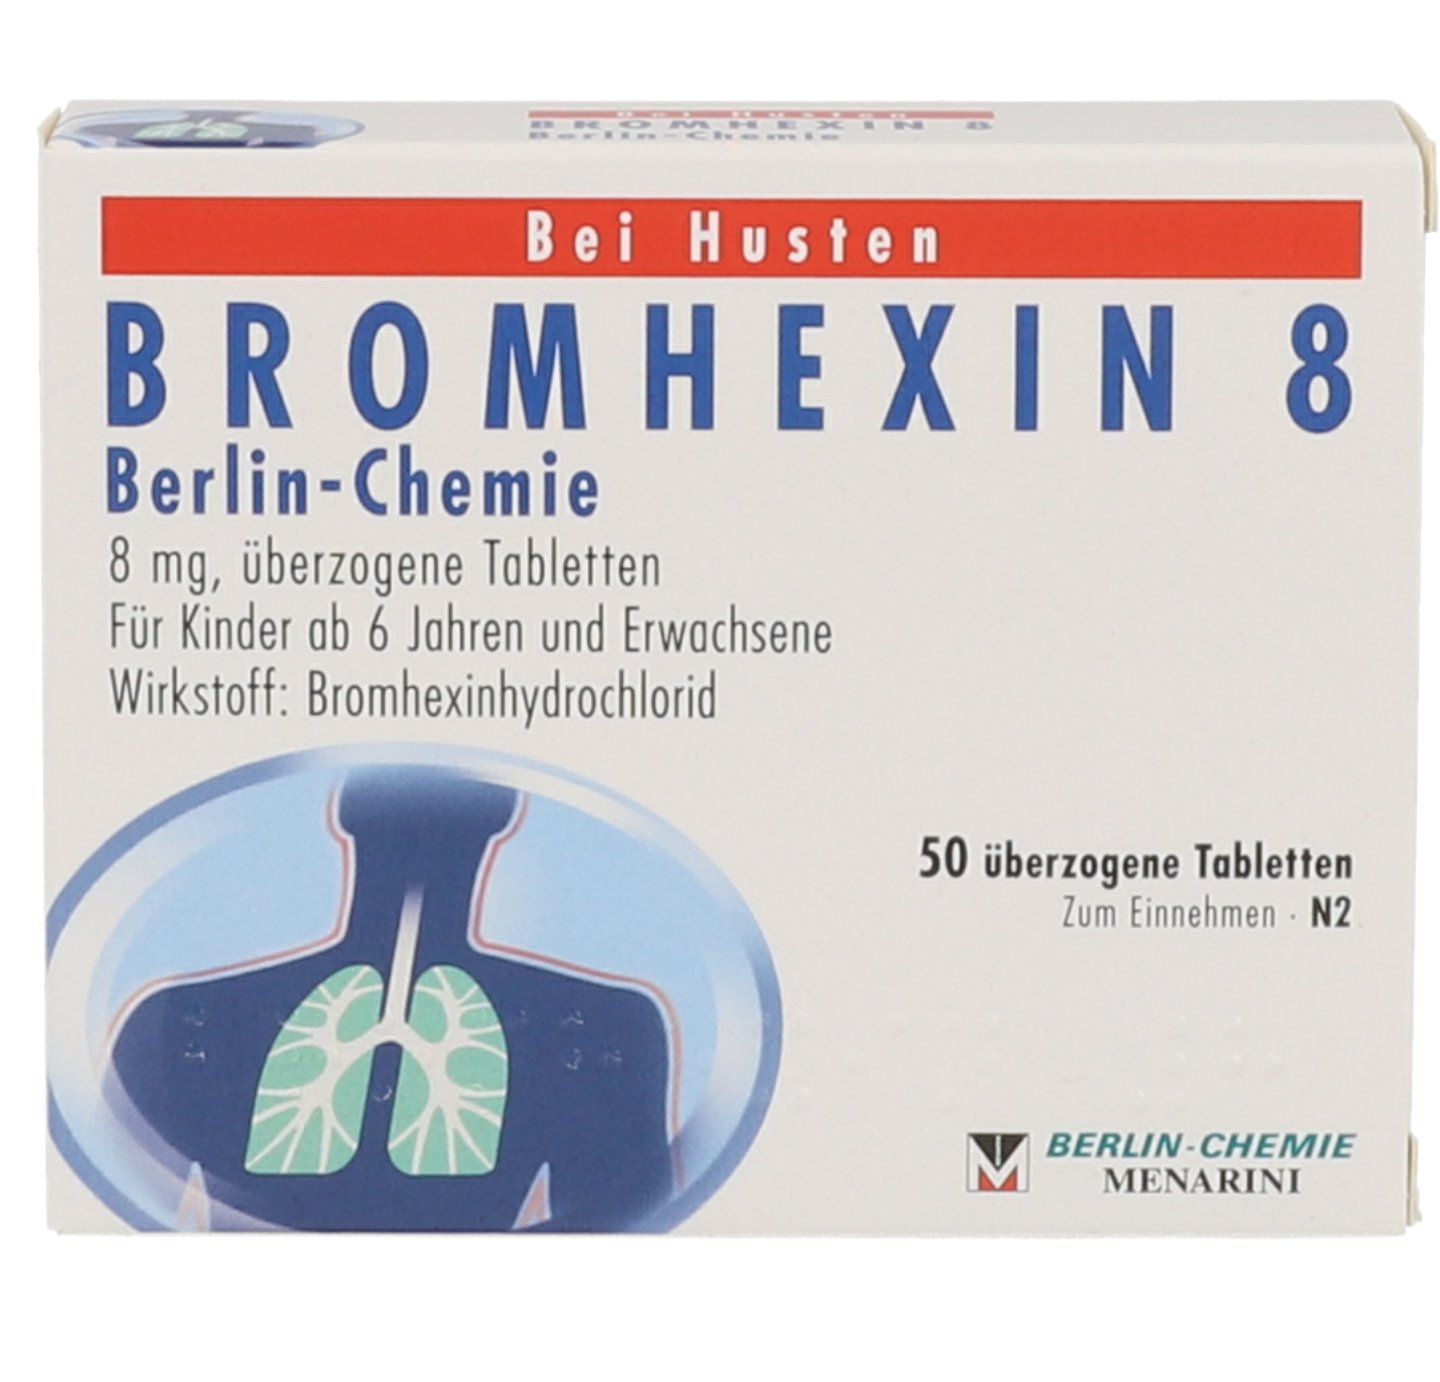 BROMHEXIN 8 Berlin Chemie überzogene Tabletten